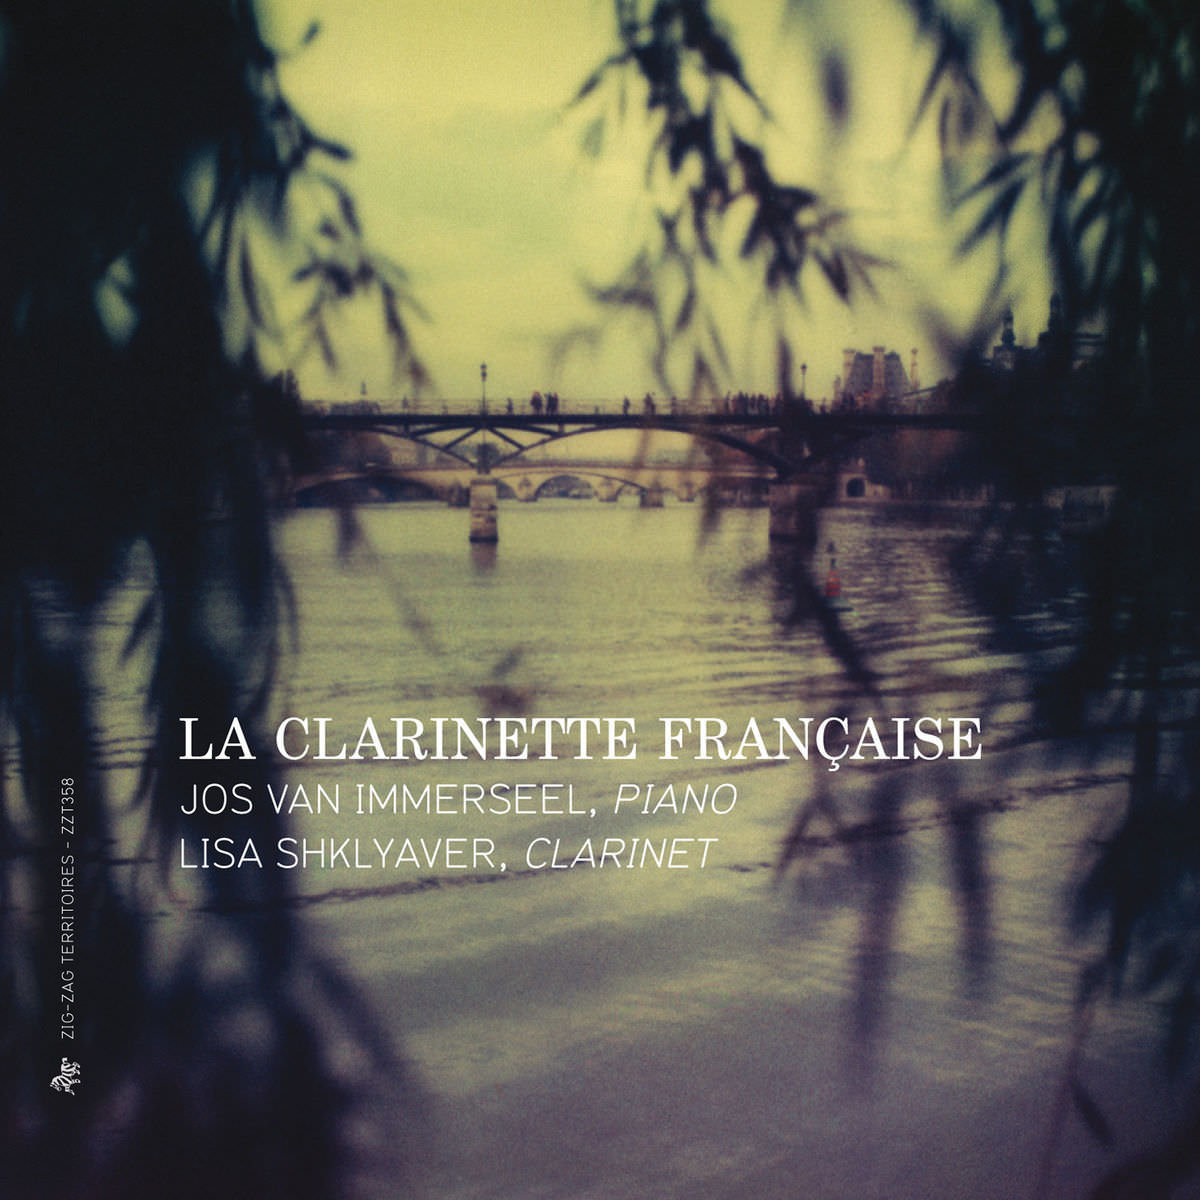 Lisa Shklyaver & Jos van Immerseel – La clarinette francaise (2015) [FLAC 24bit/96kHz]